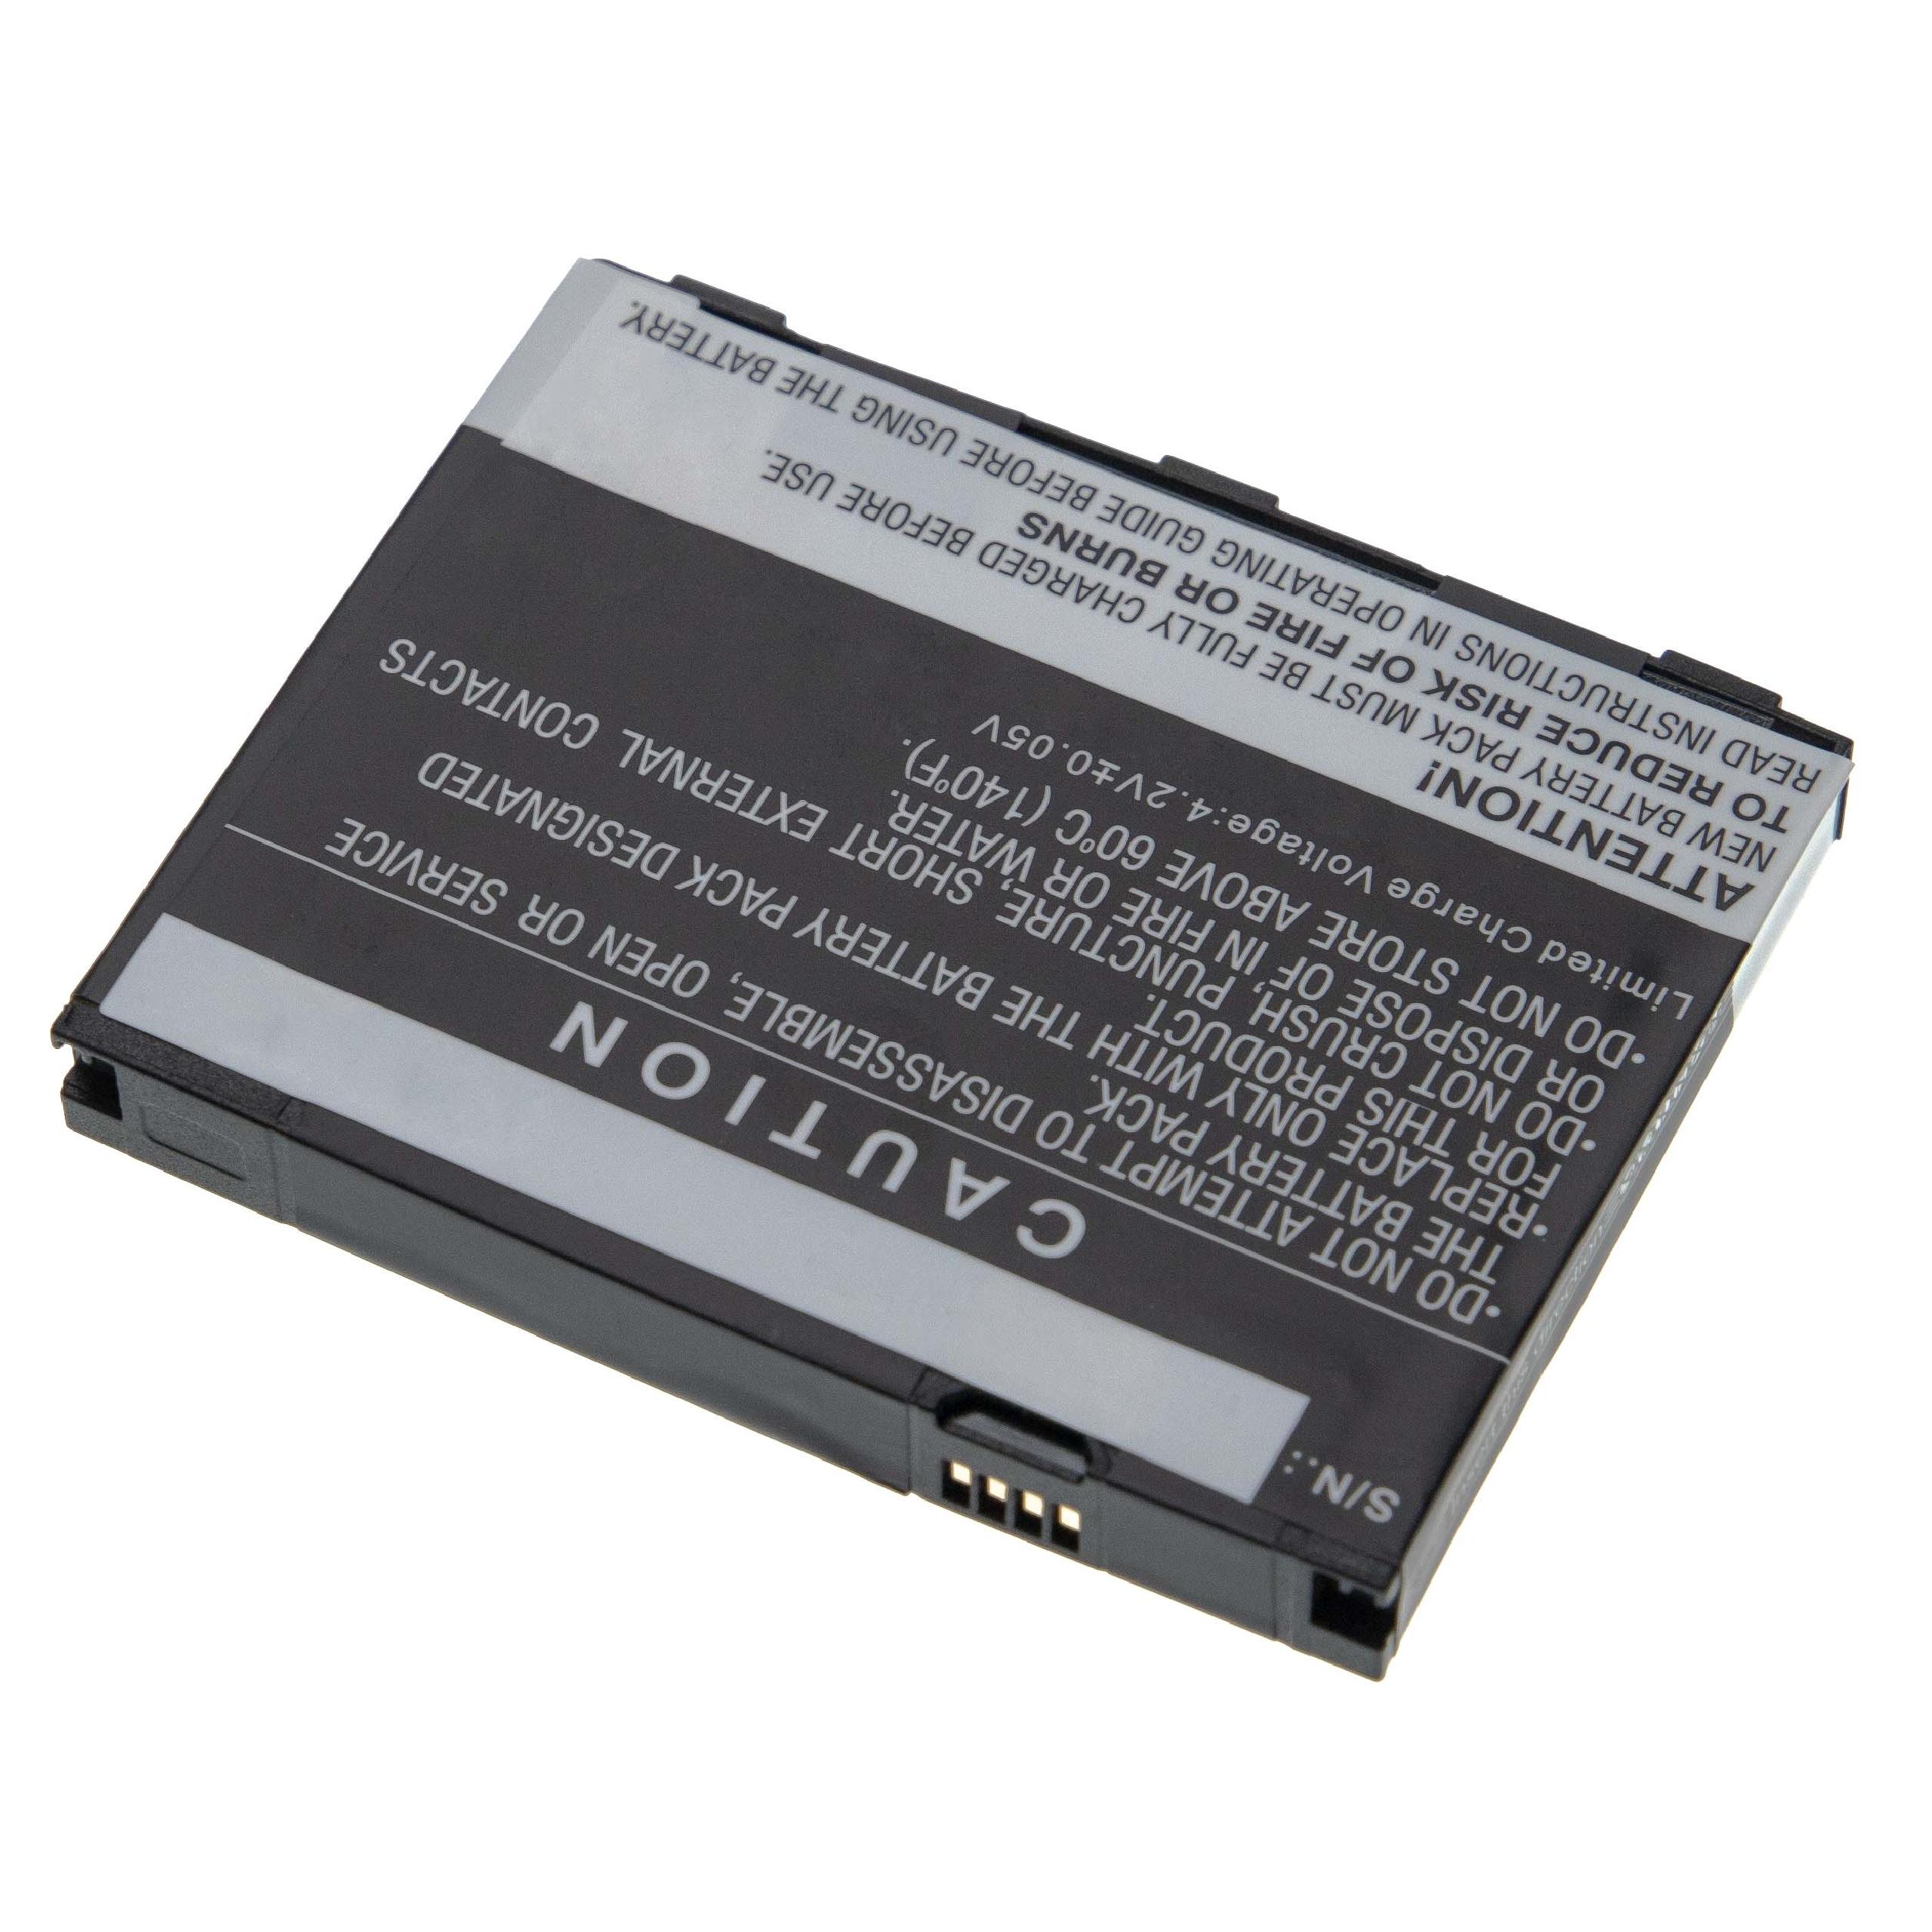 Akumulator do mobilnego routera / modemu WiFi zamiennik Netgear W-10, 308-10019-01 - 5000 mAh 3,7 V LiPo